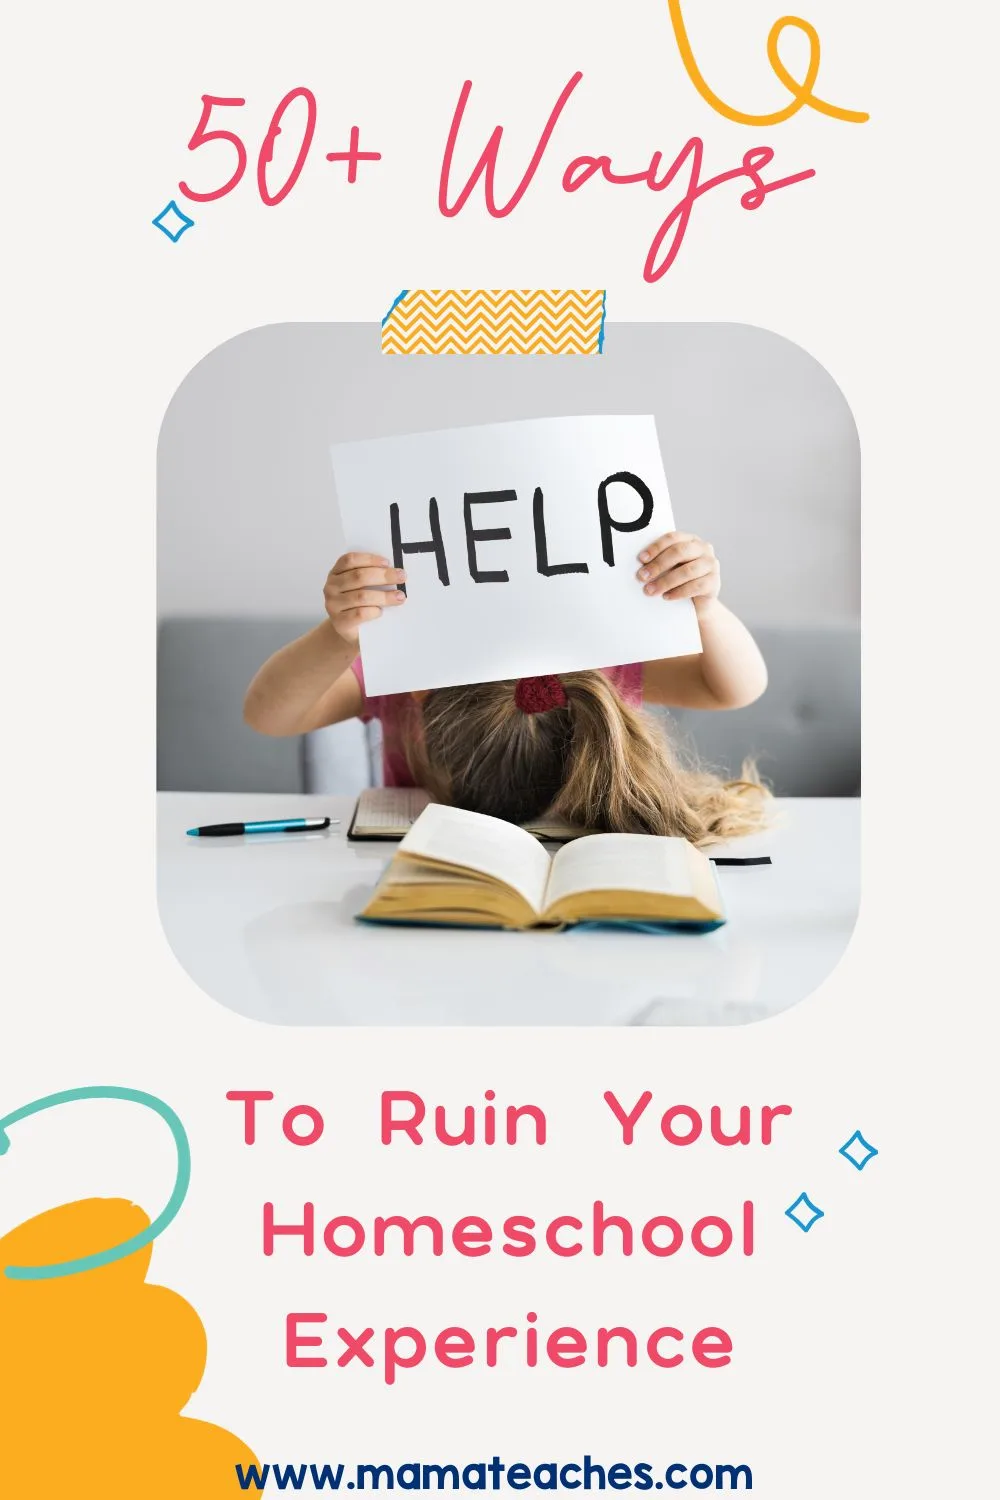 50+ Ways to Ruin Your Homeschool Experience